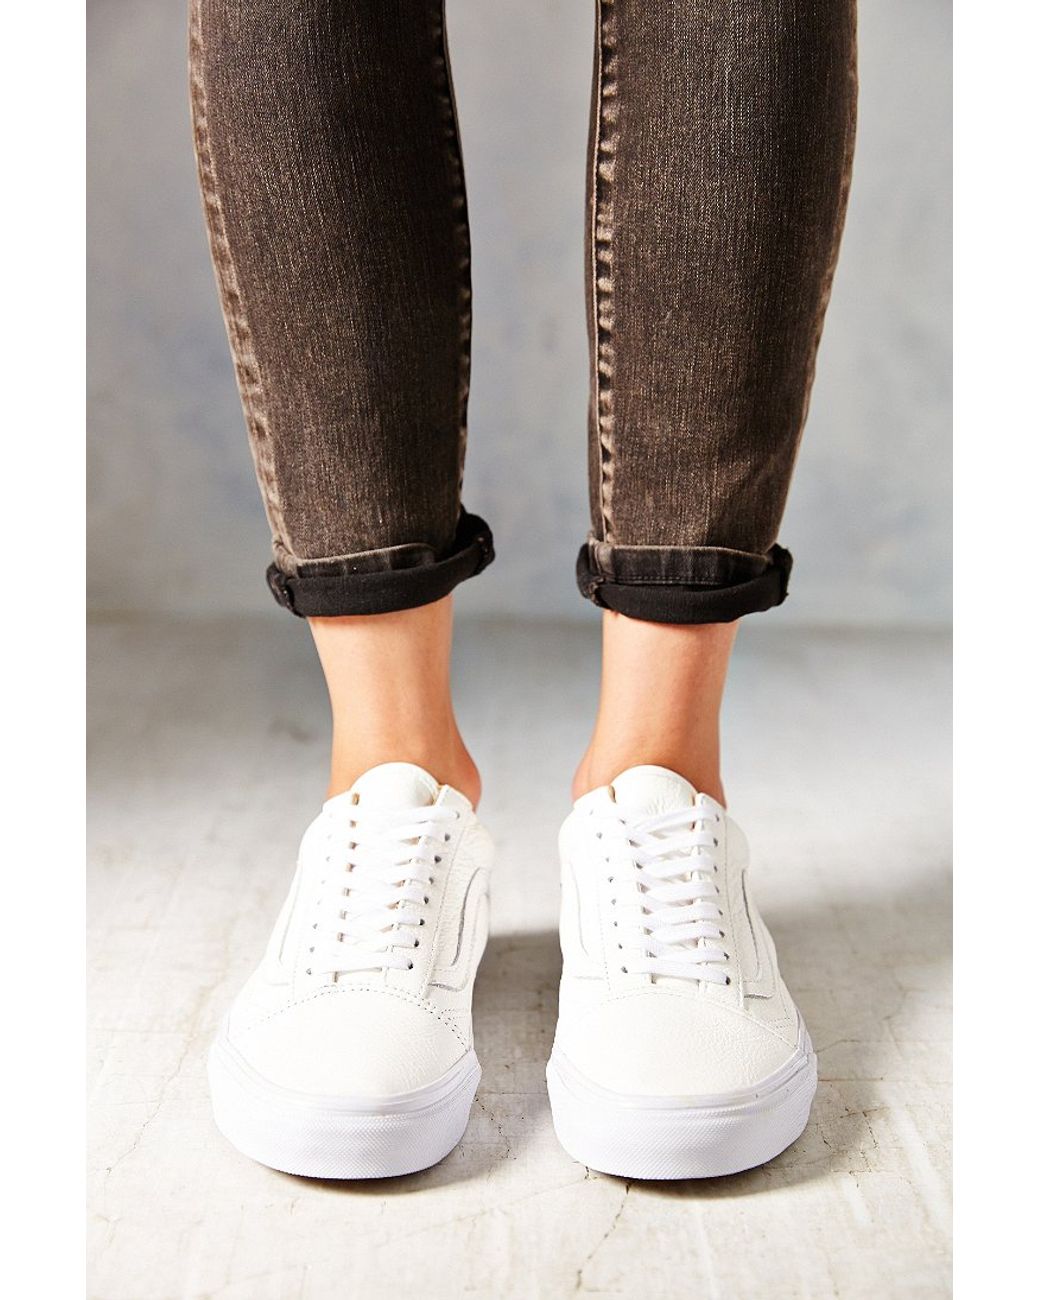 Munk cache rille Vans Old Skool Premium Leather Low-Top Women'S Sneaker in White | Lyst